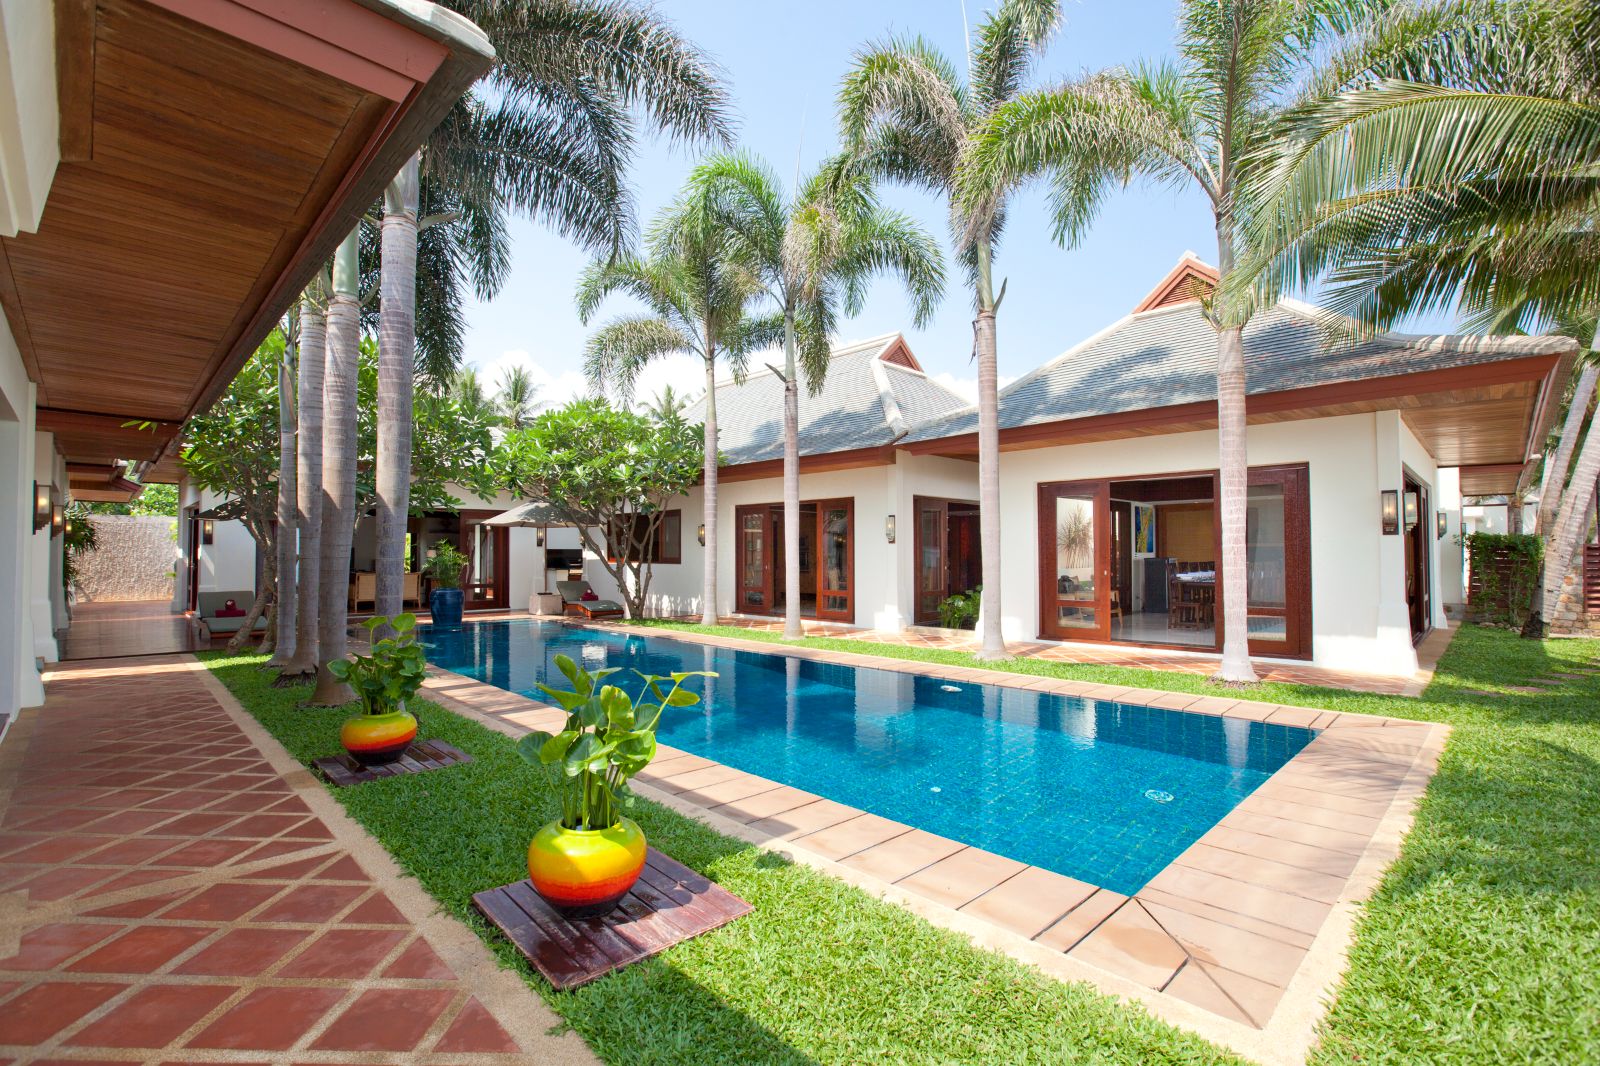 Pool and gardens at villa Gardenia on Koh Samui in Thailand